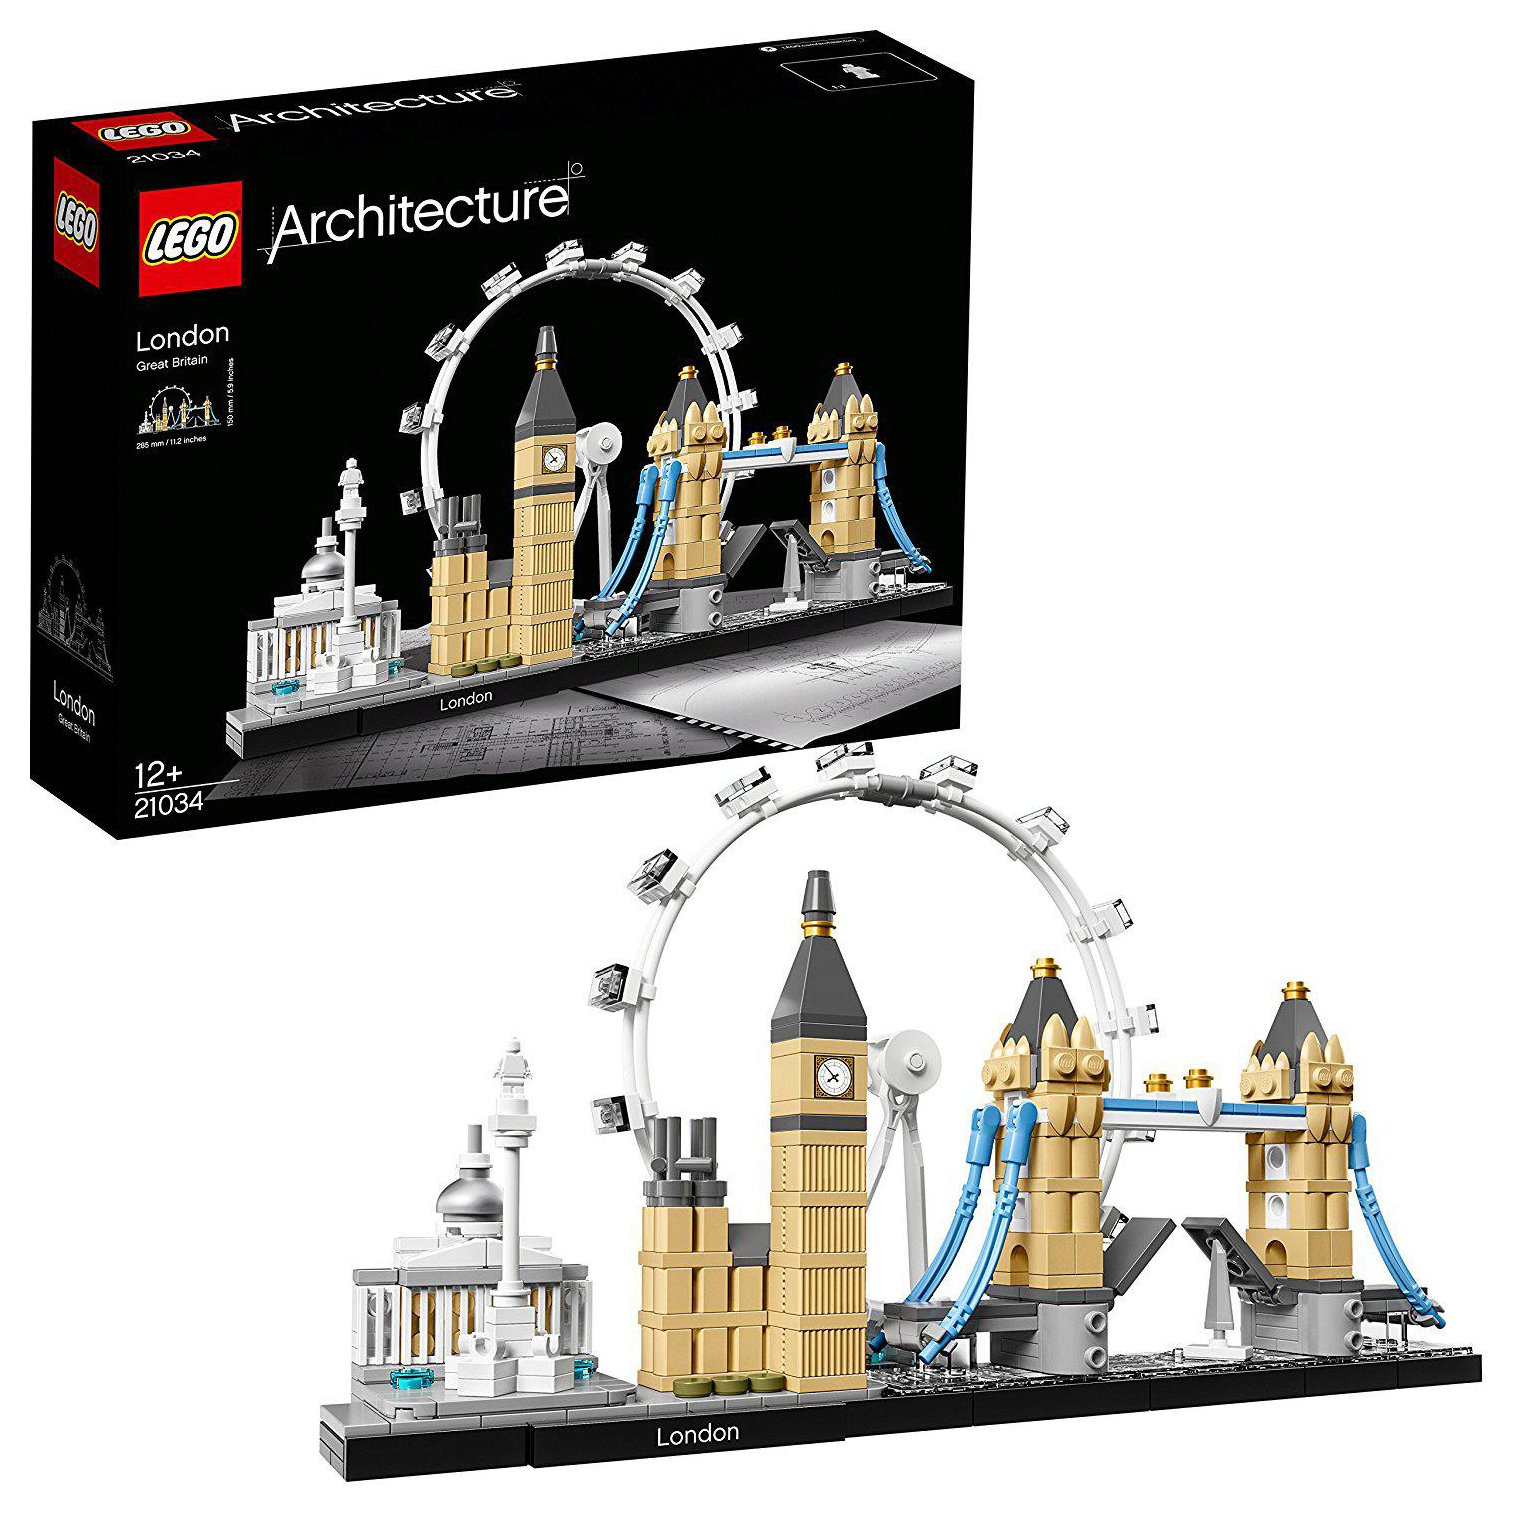 LEGO Architecture London City Building Kit 21034